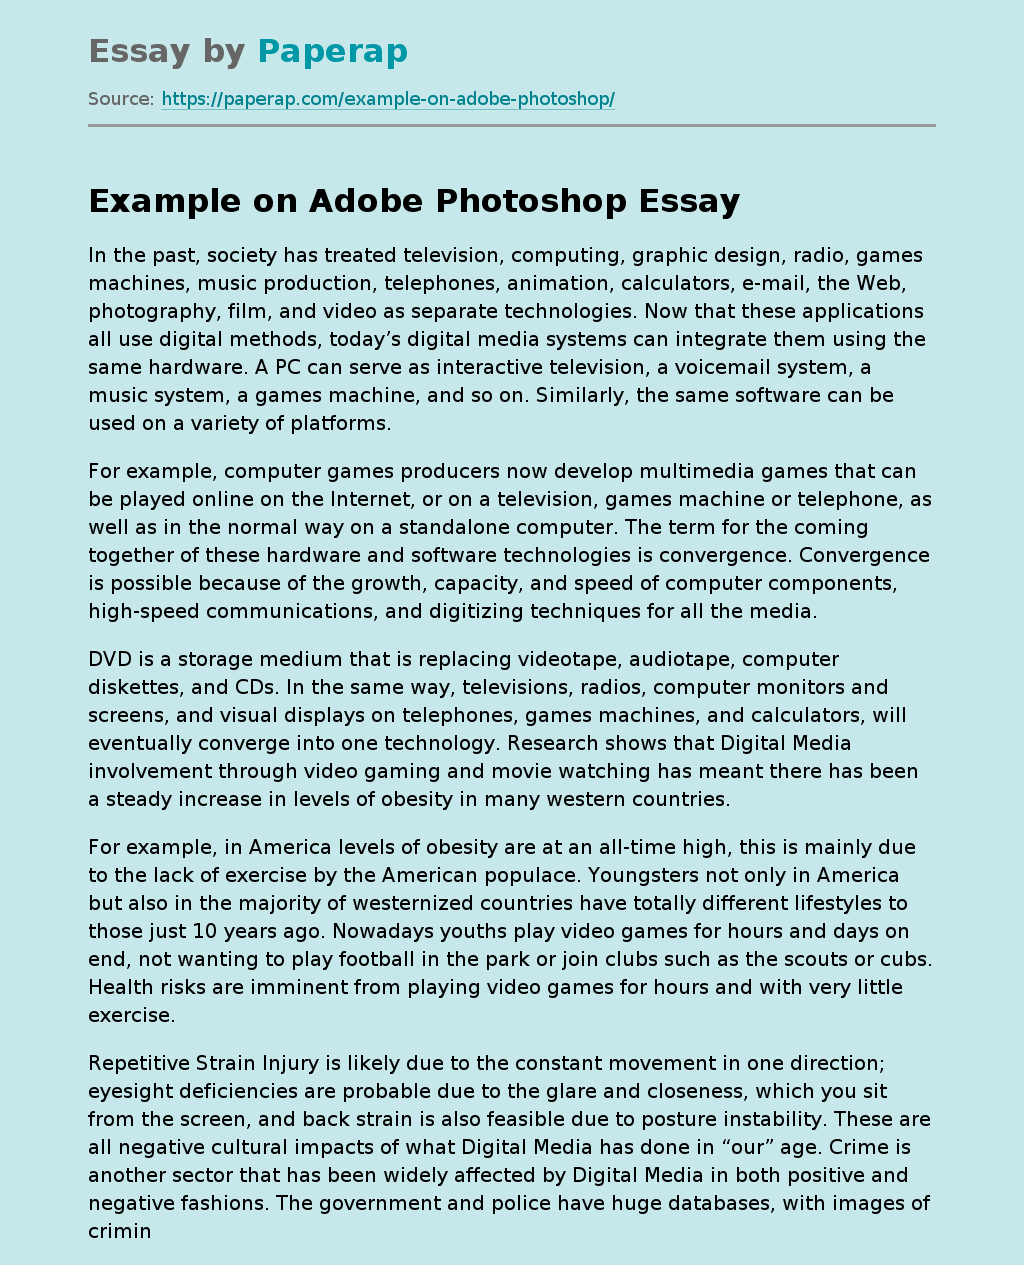 Example on Adobe Photoshop